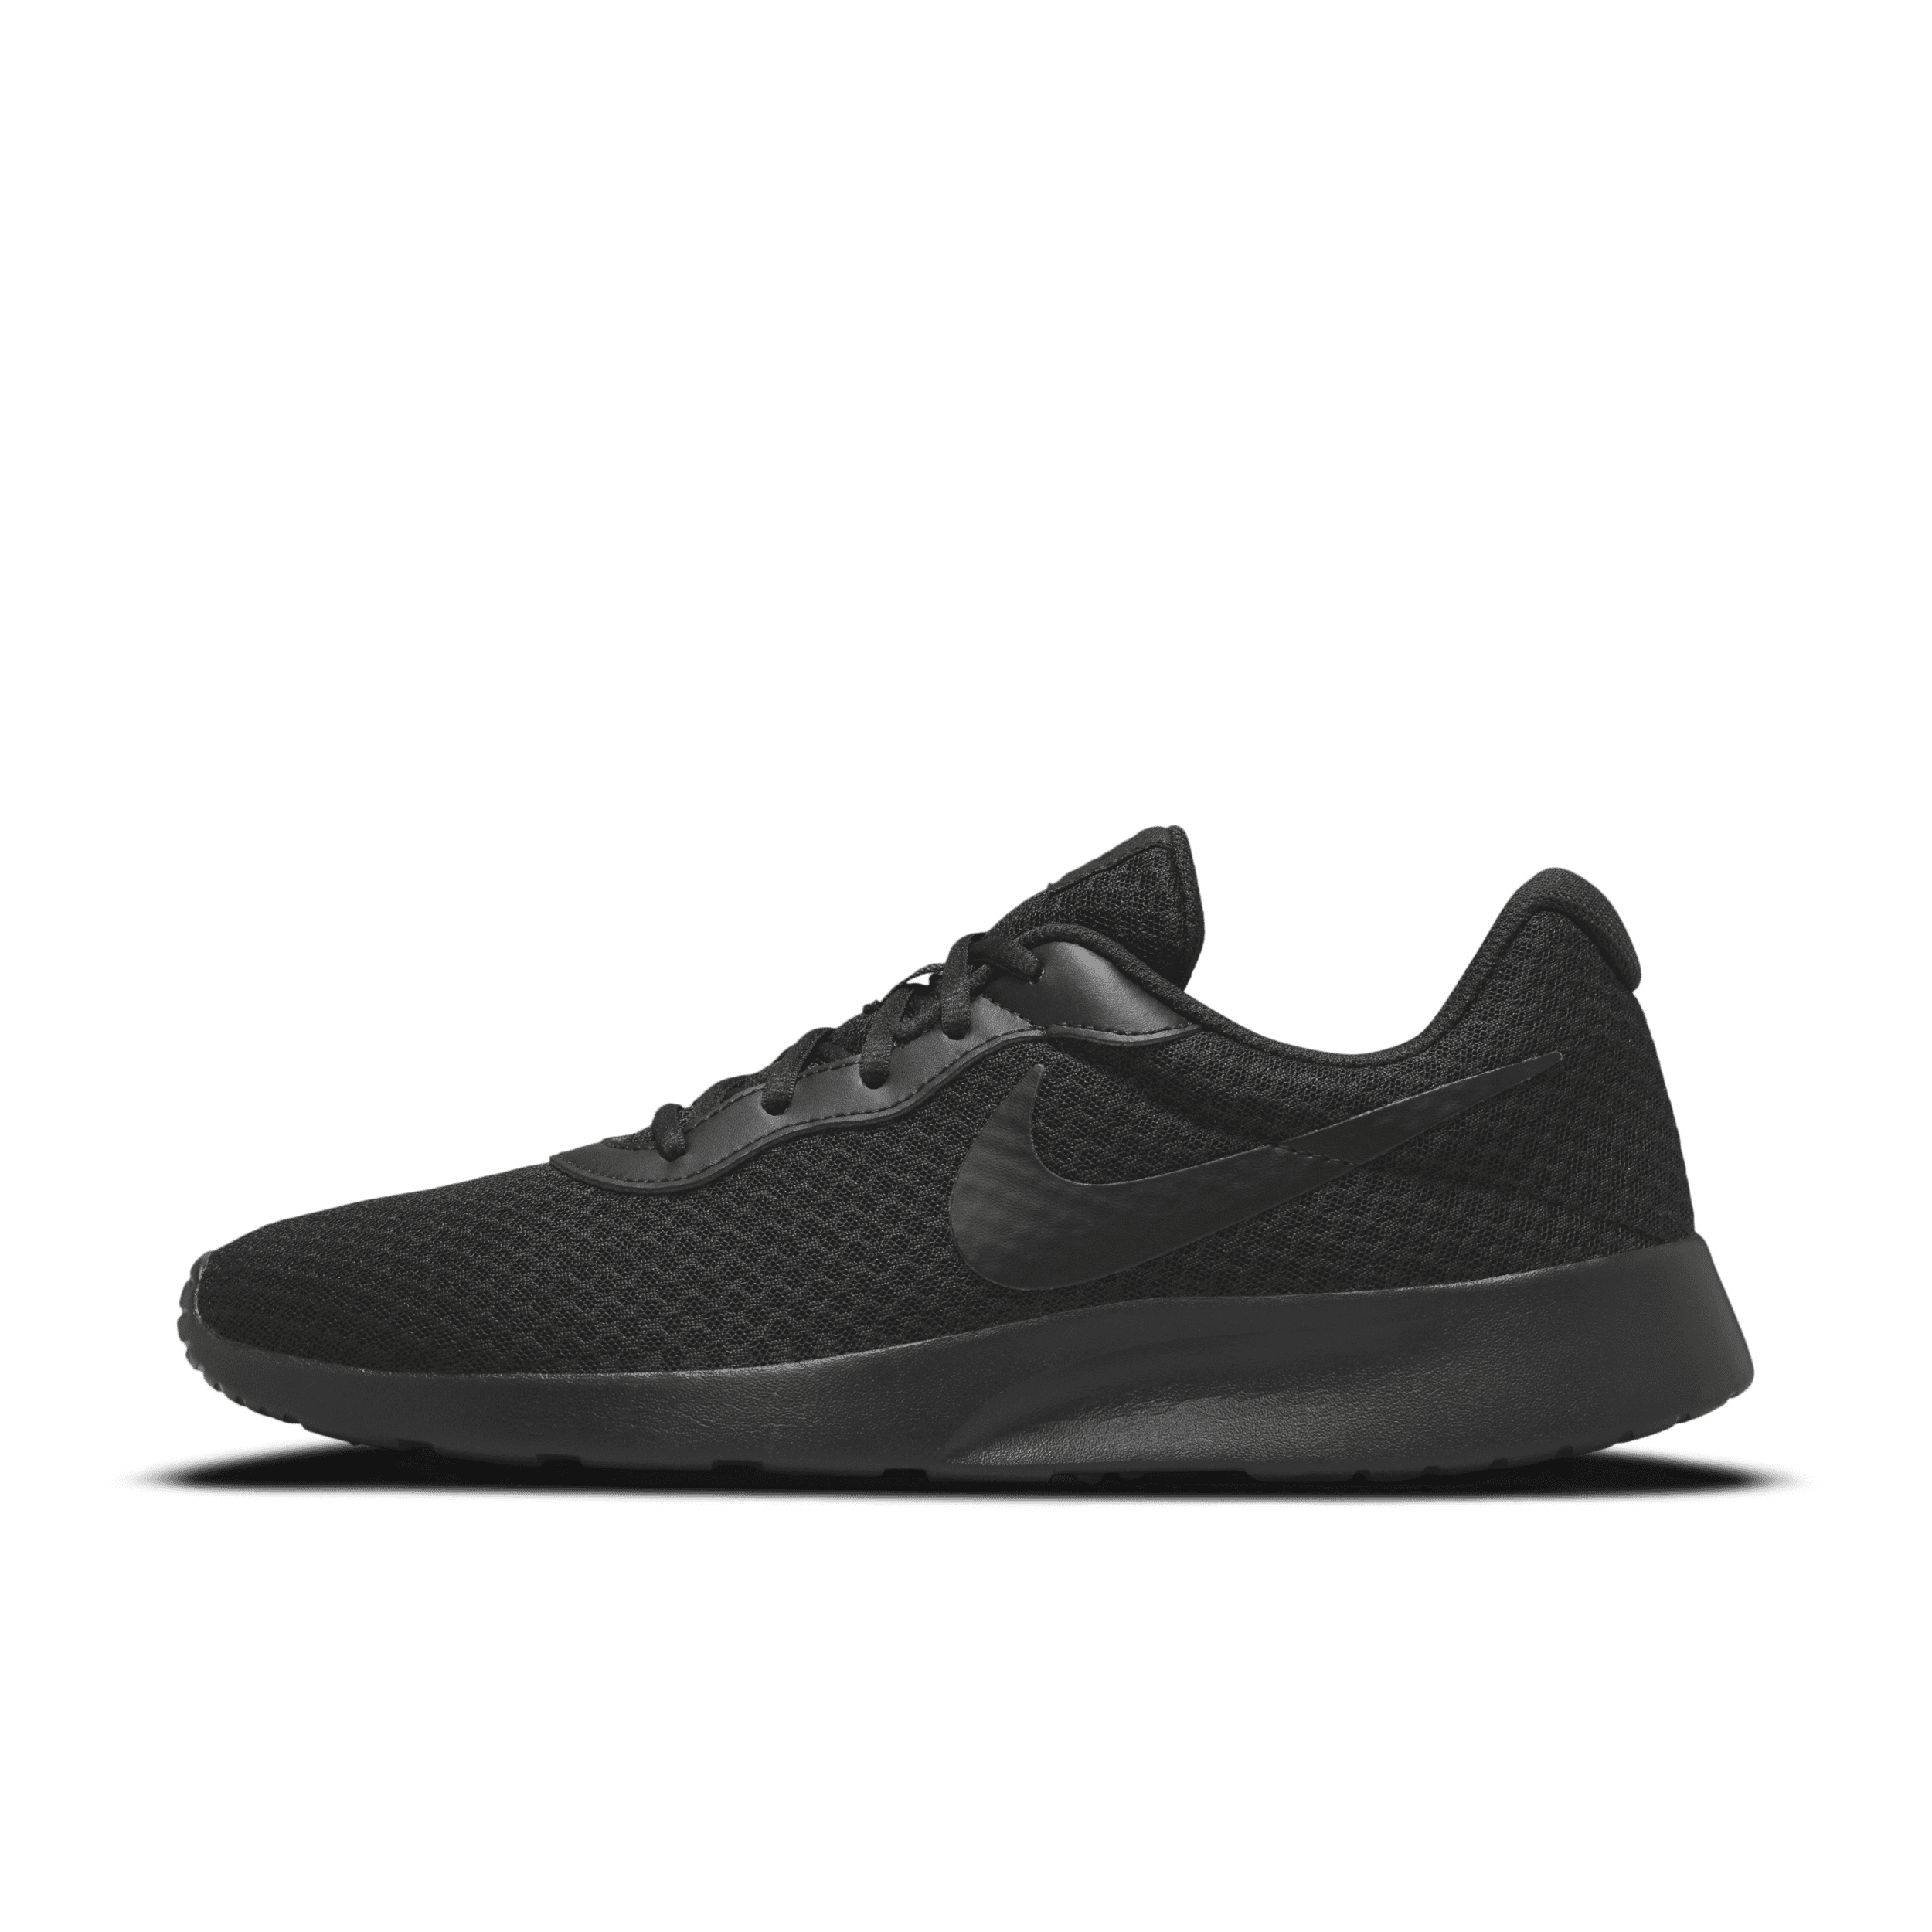 Nike Tanjun Herenschoenen – Zwart